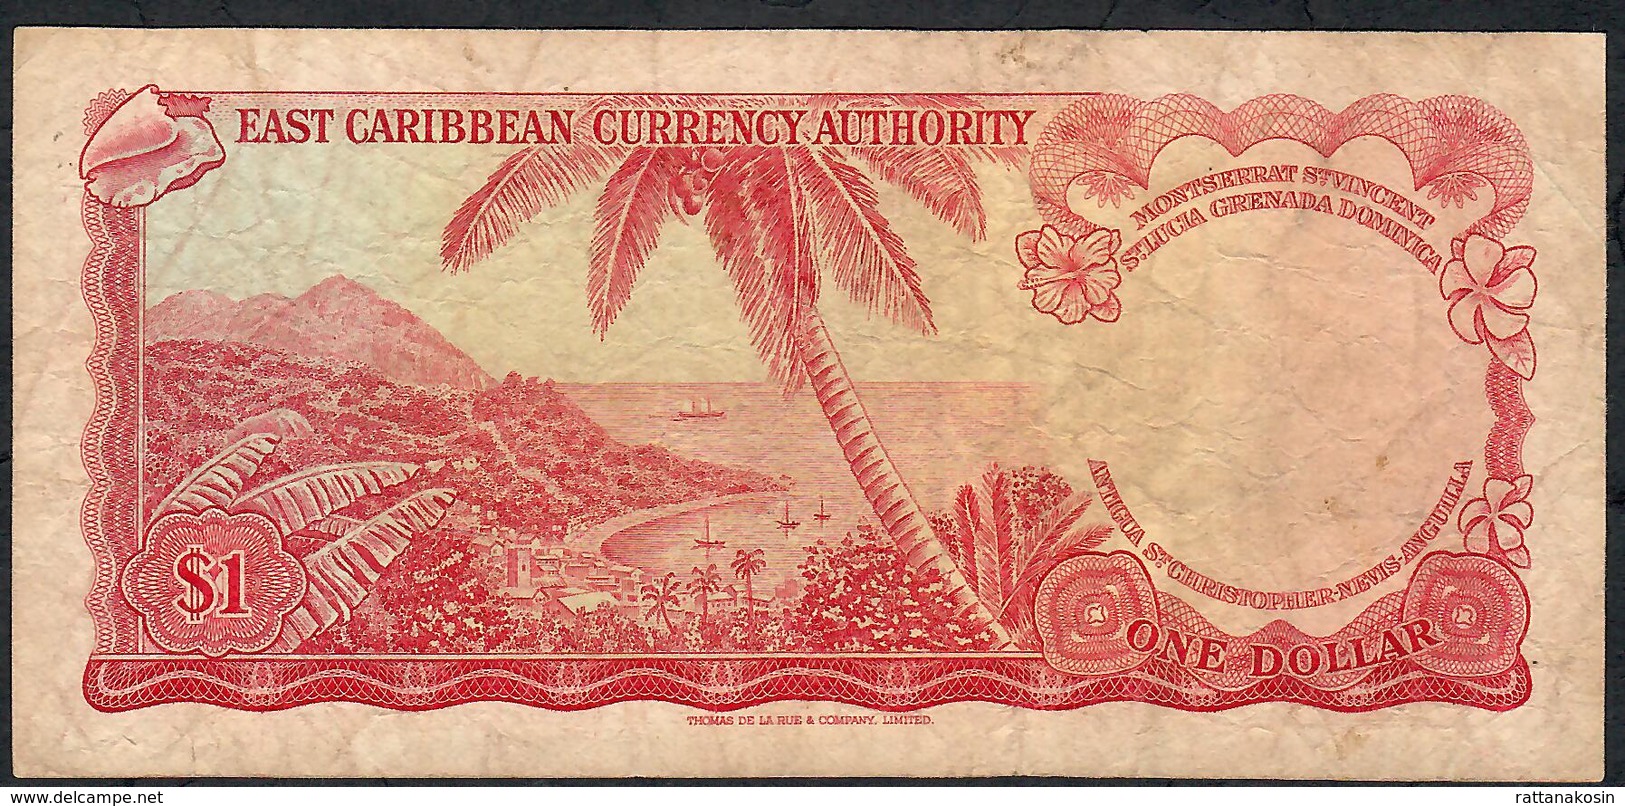 E.C.T. P13c8 1 DOLLAR 1965  #B54 Signature 8 Issued 1974  VF  NO P.h. - East Carribeans